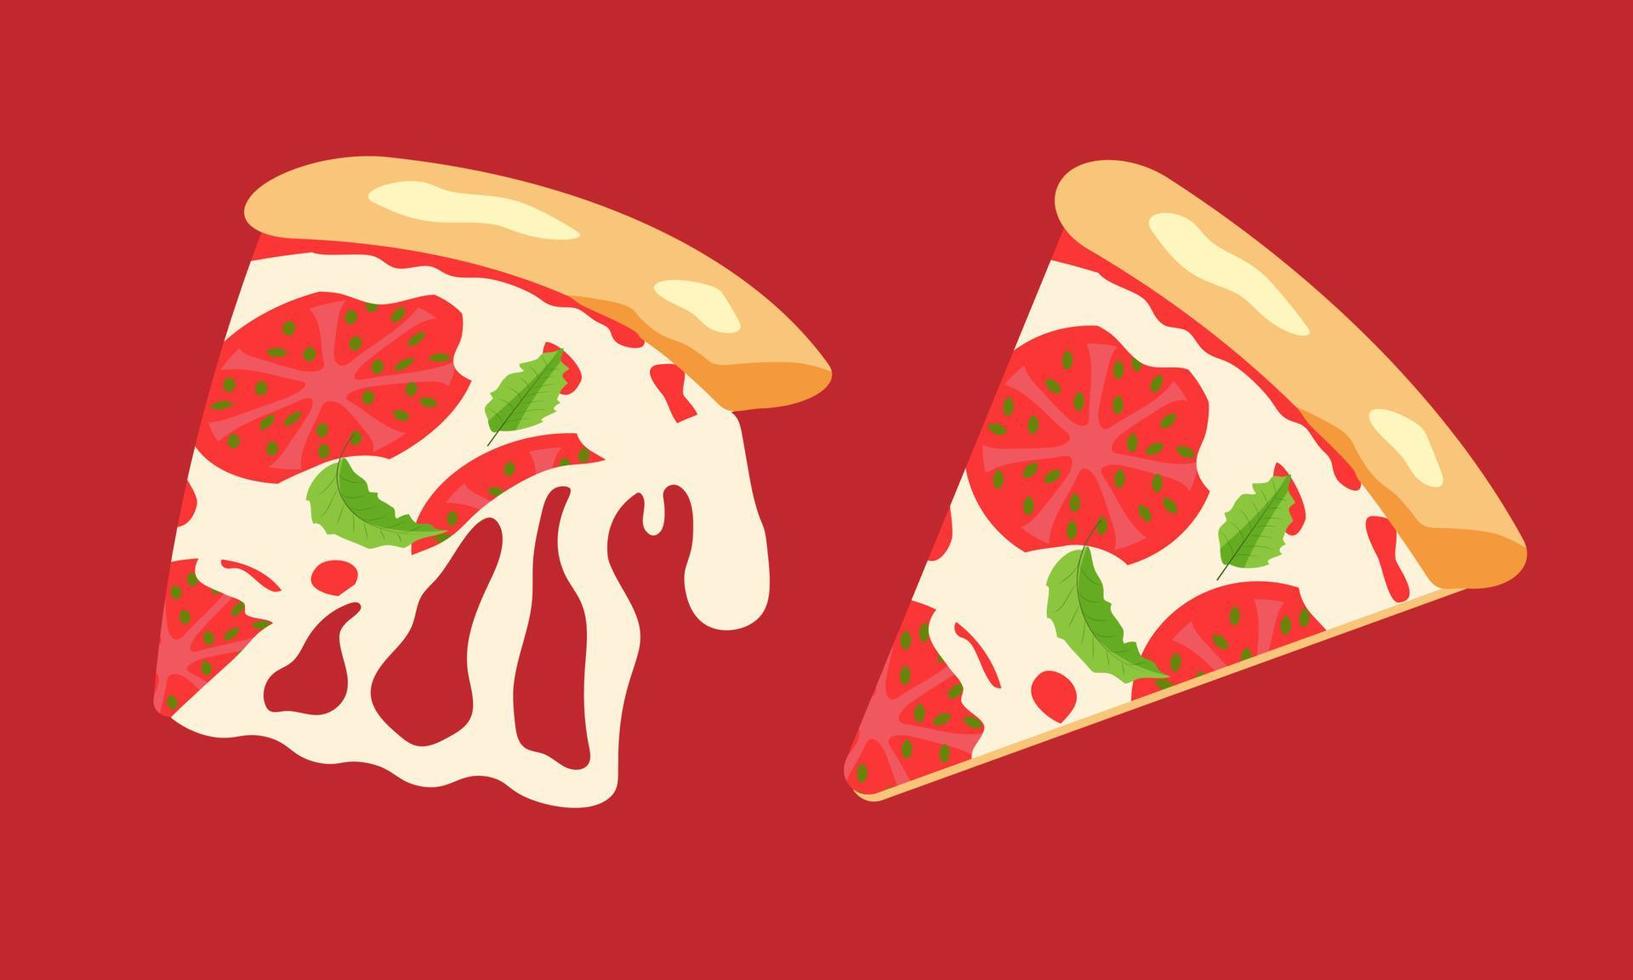 zwei Stücke leckere Margarita-Pizza. Fast-Food-Illustration. Vektor eps10